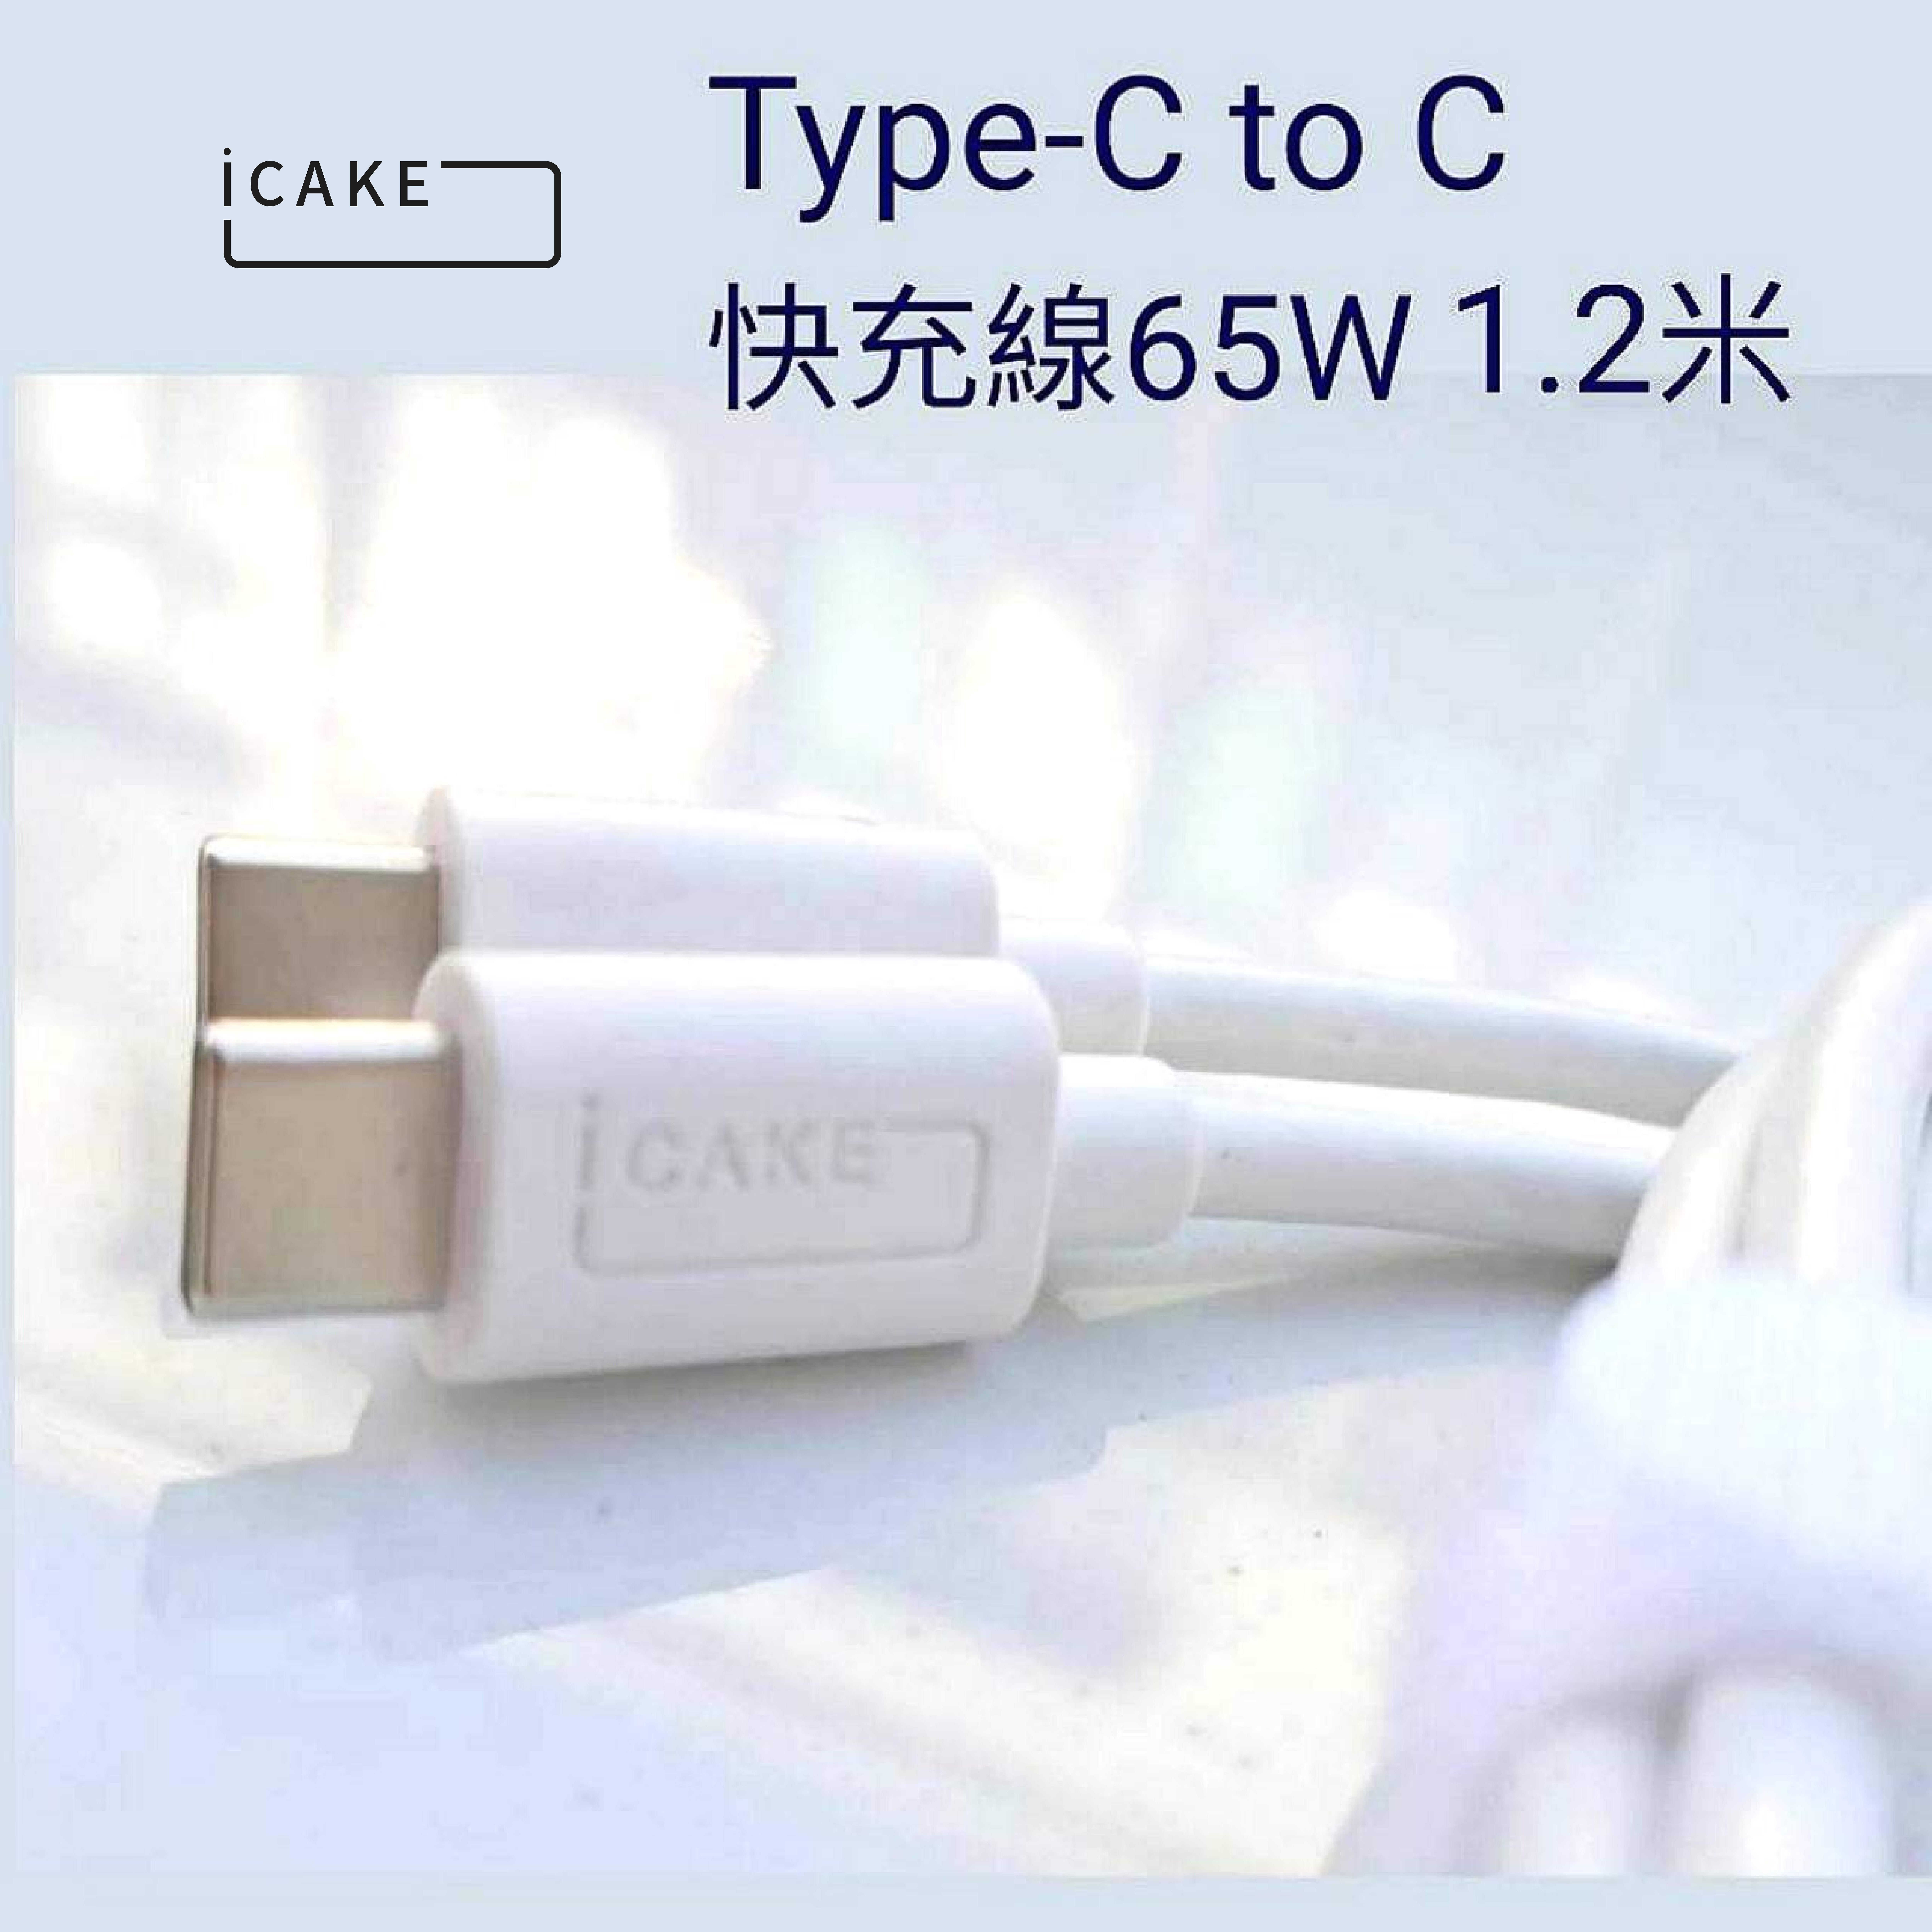 iCAKE Type-C to C 快充線+數據傳輸線 20V@3.25A 65W 1.2米長